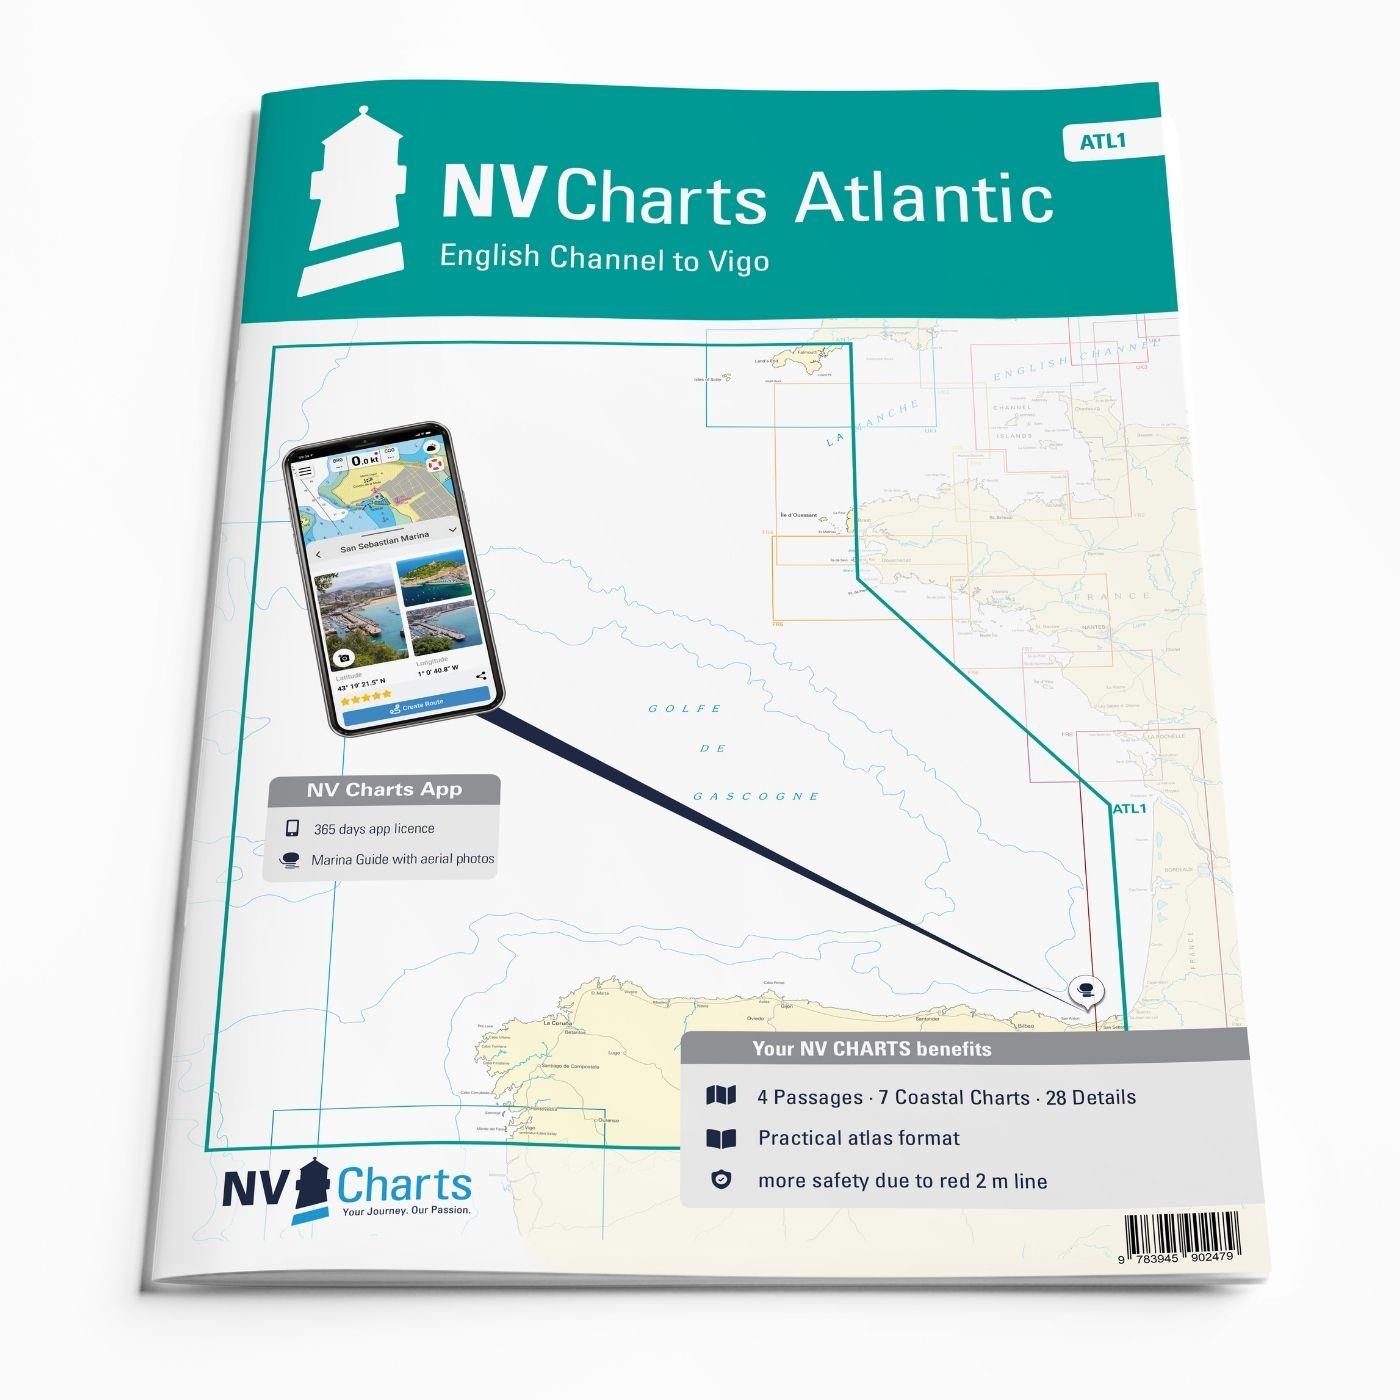 NV Charts Atlantic ATL1 - English Channel to Vigo